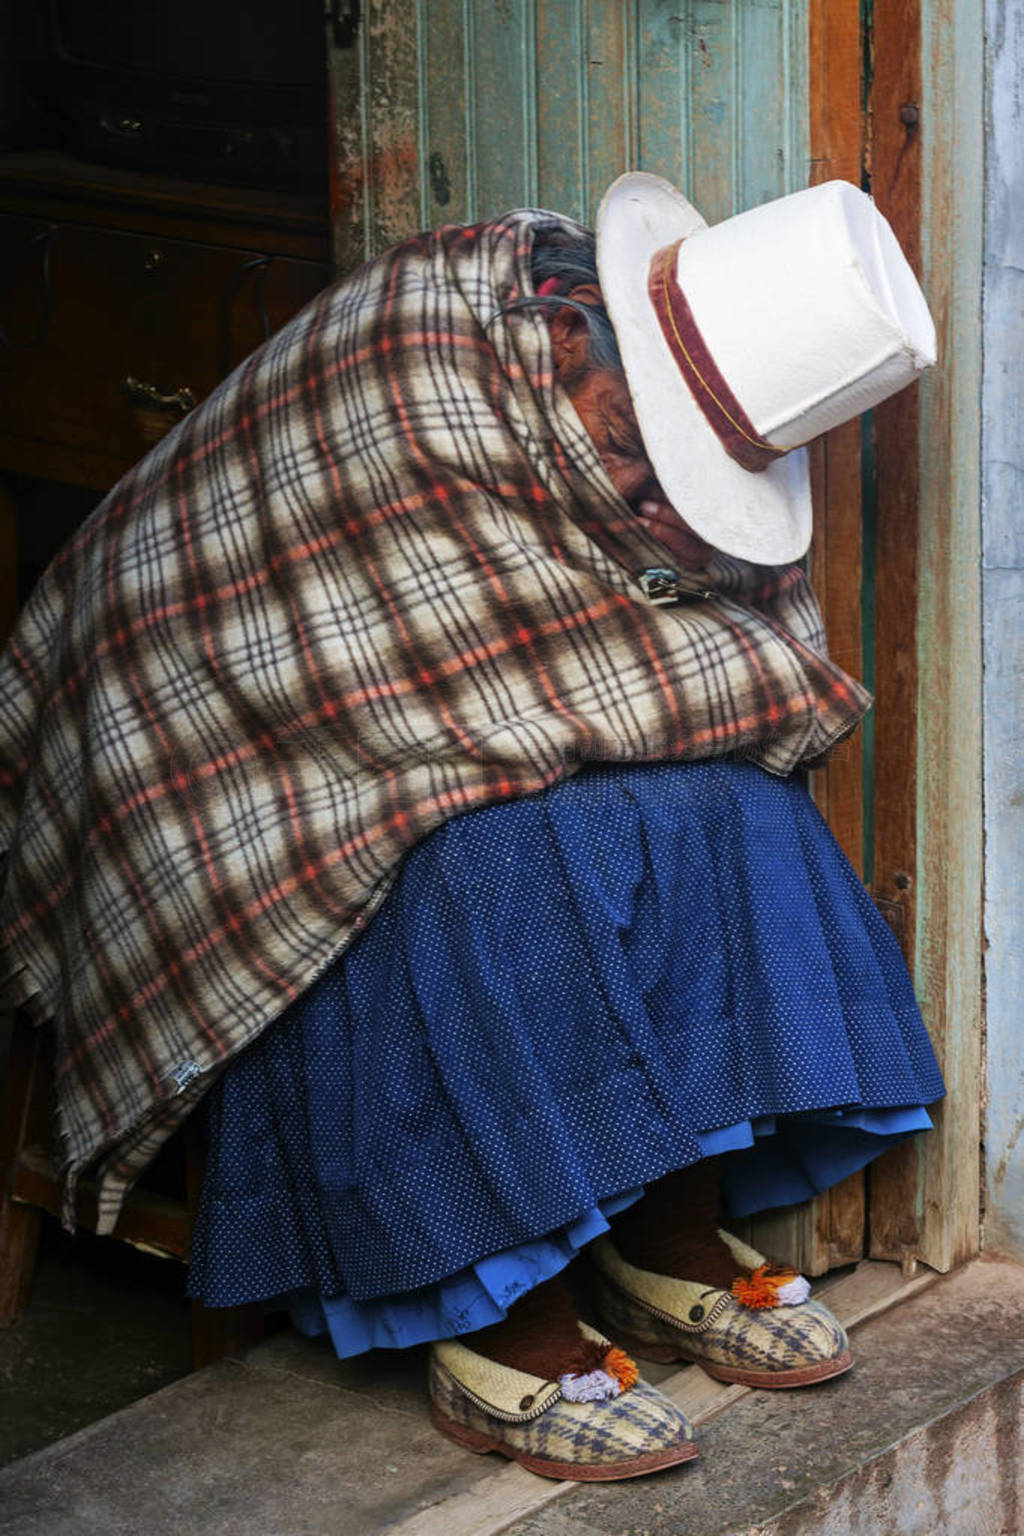 Cusco, Peru - AUGUST 31 2019: Indigenous senior woman sleeping a